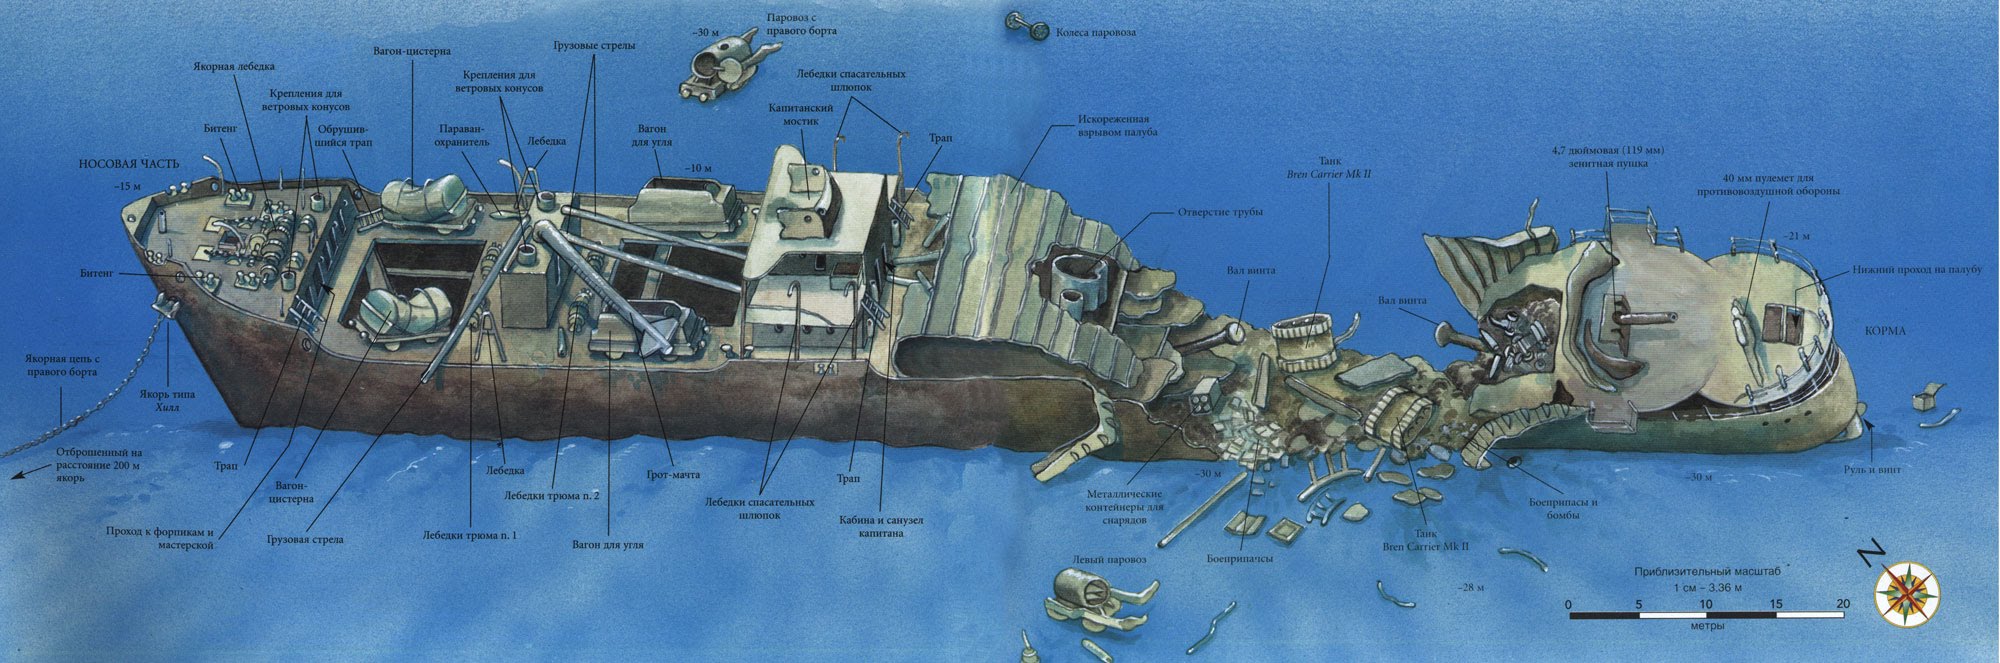 Plan of the Thistlegorm Wreck